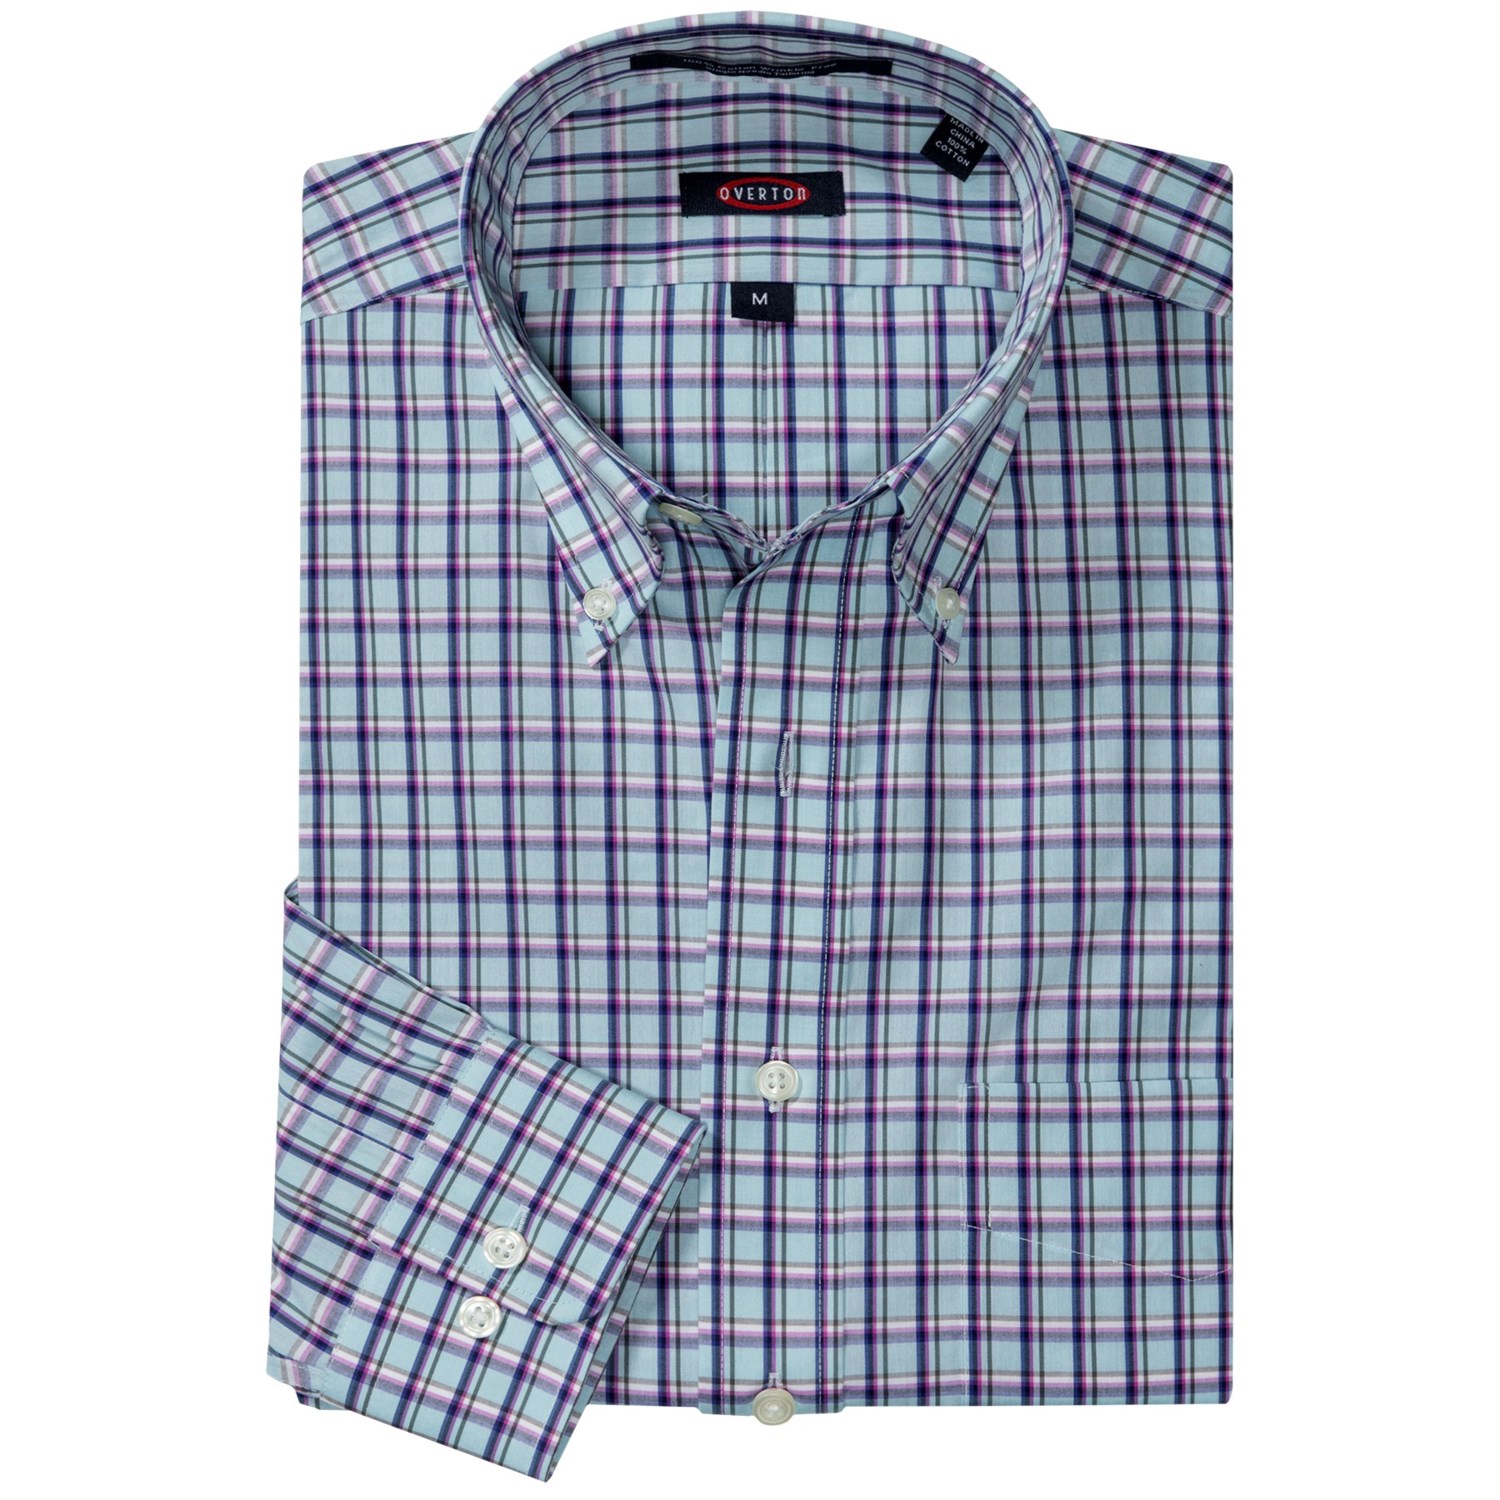 Overton Wrinkle-Free Plaid Sport Shirt - Long Sleeve (For Men) - Save 52%